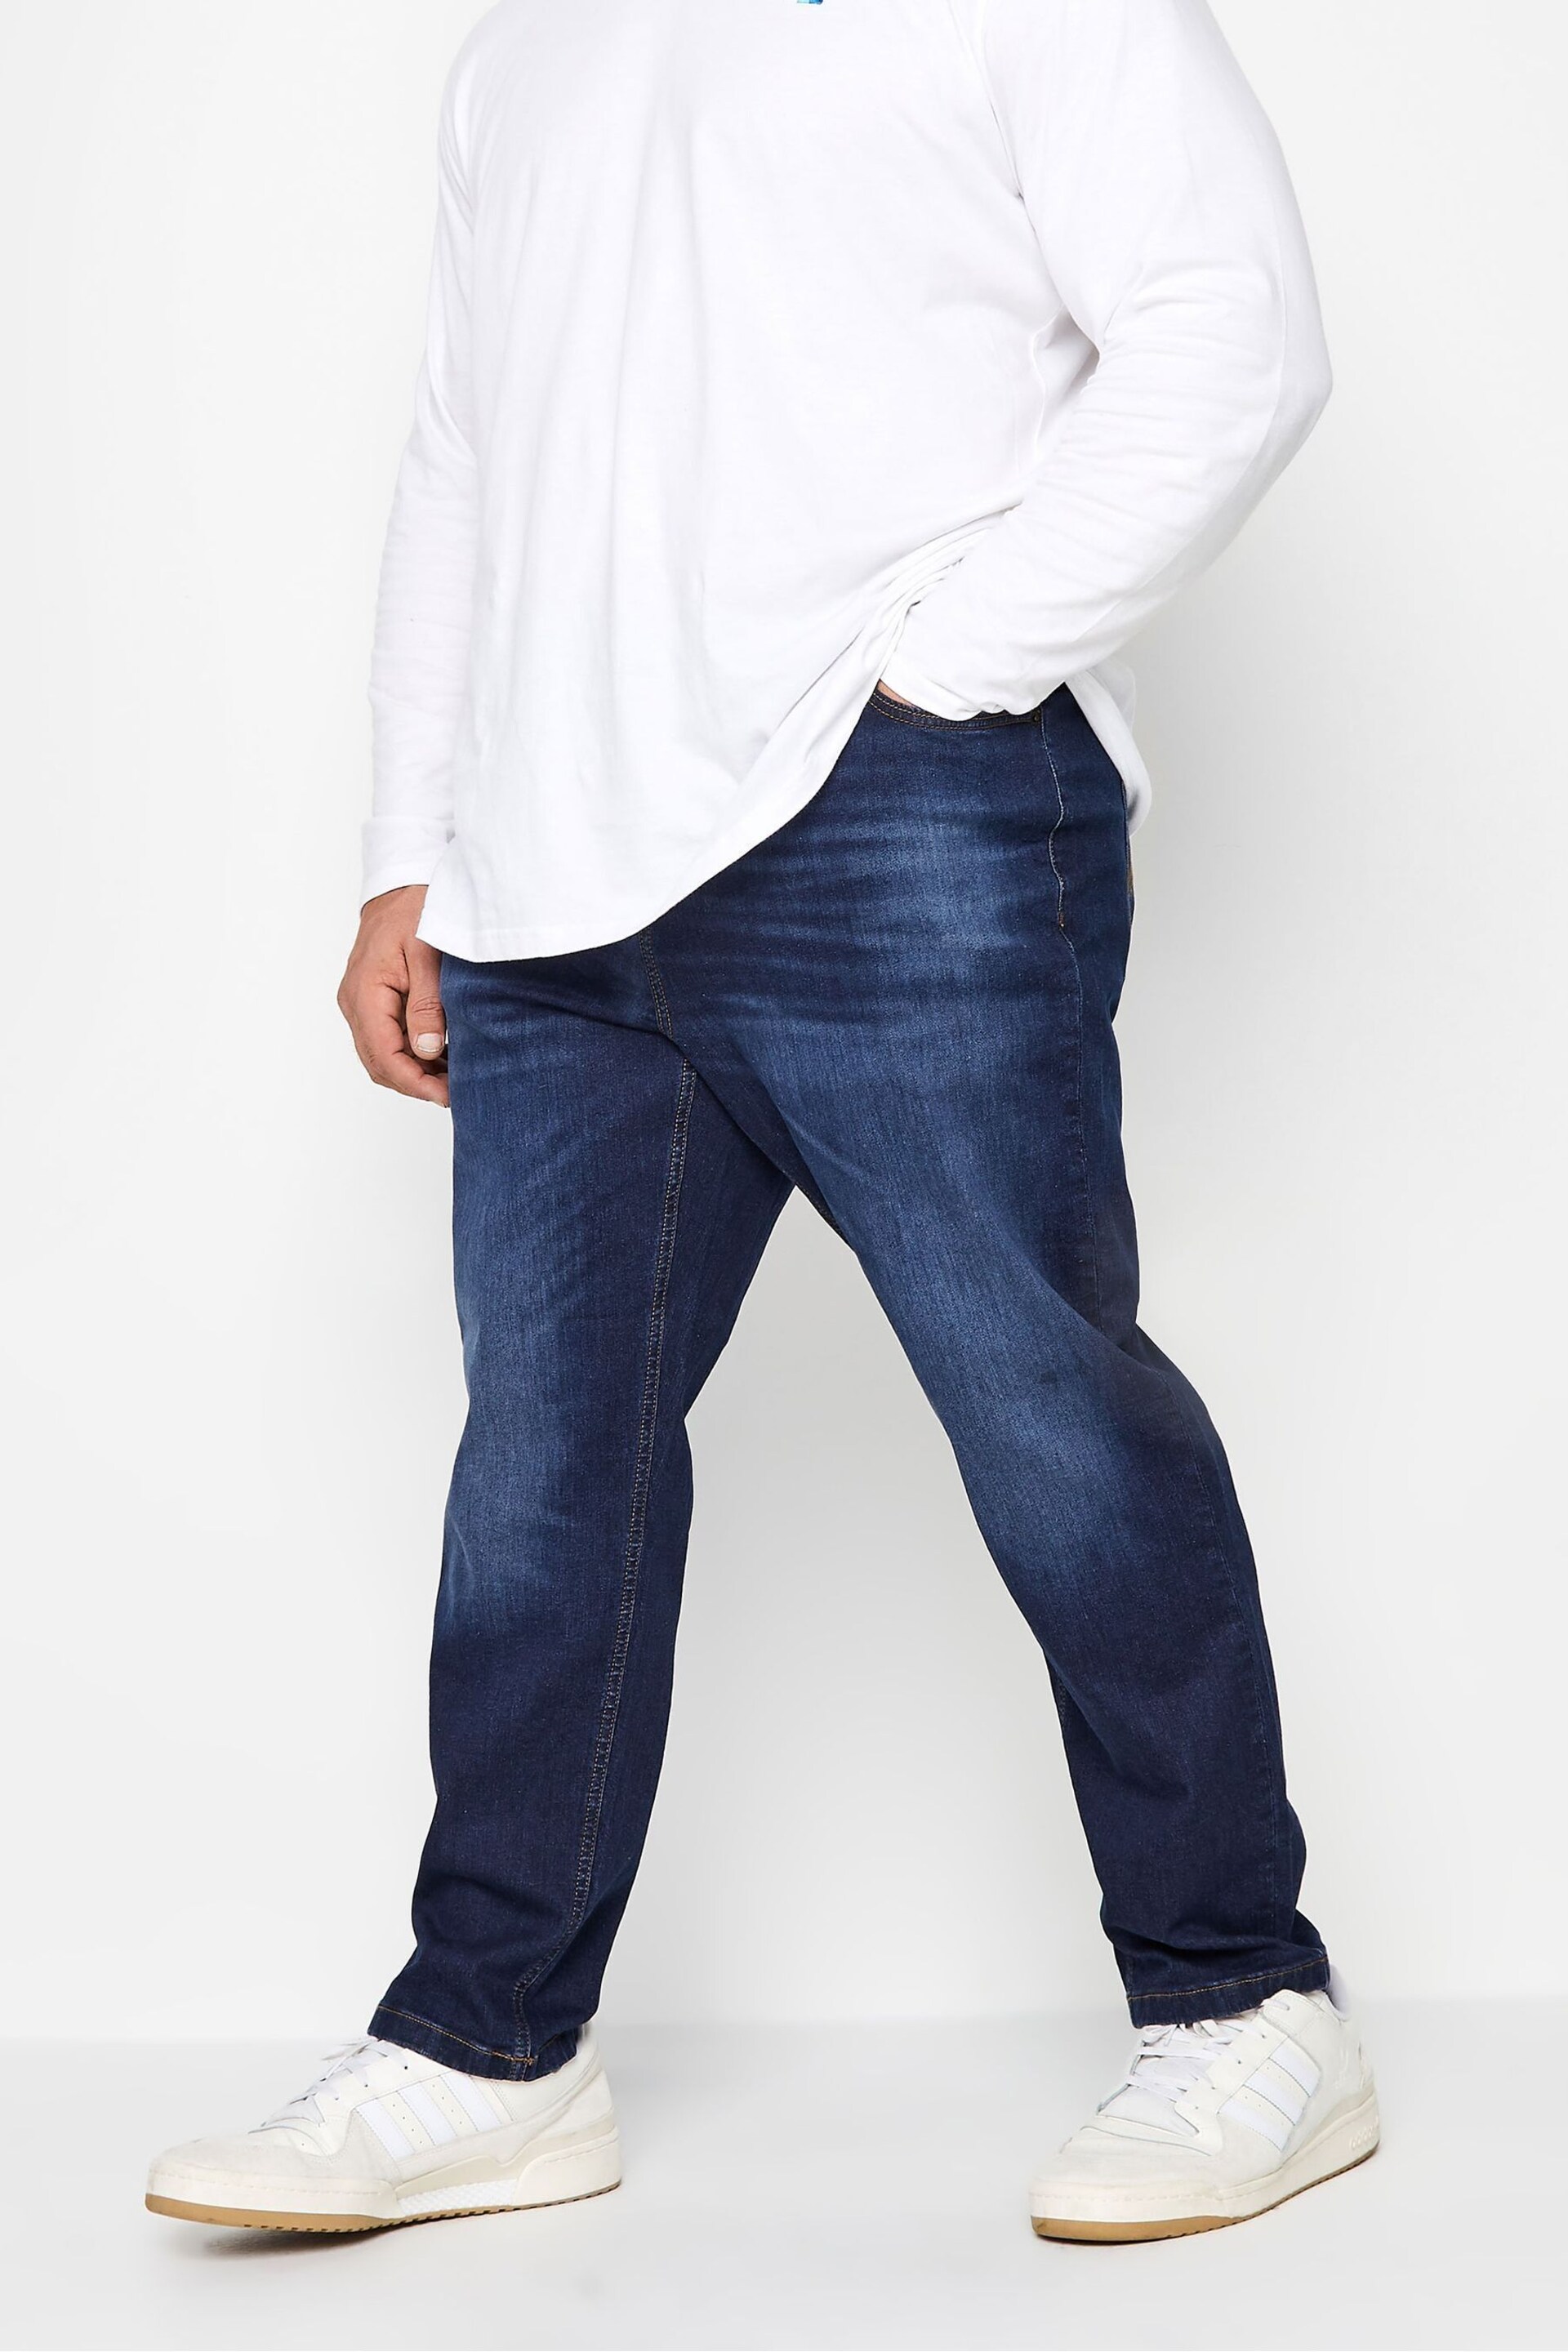 BadRhino Big & Tall Dark Blue Washed Denim Jeans - Image 1 of 4